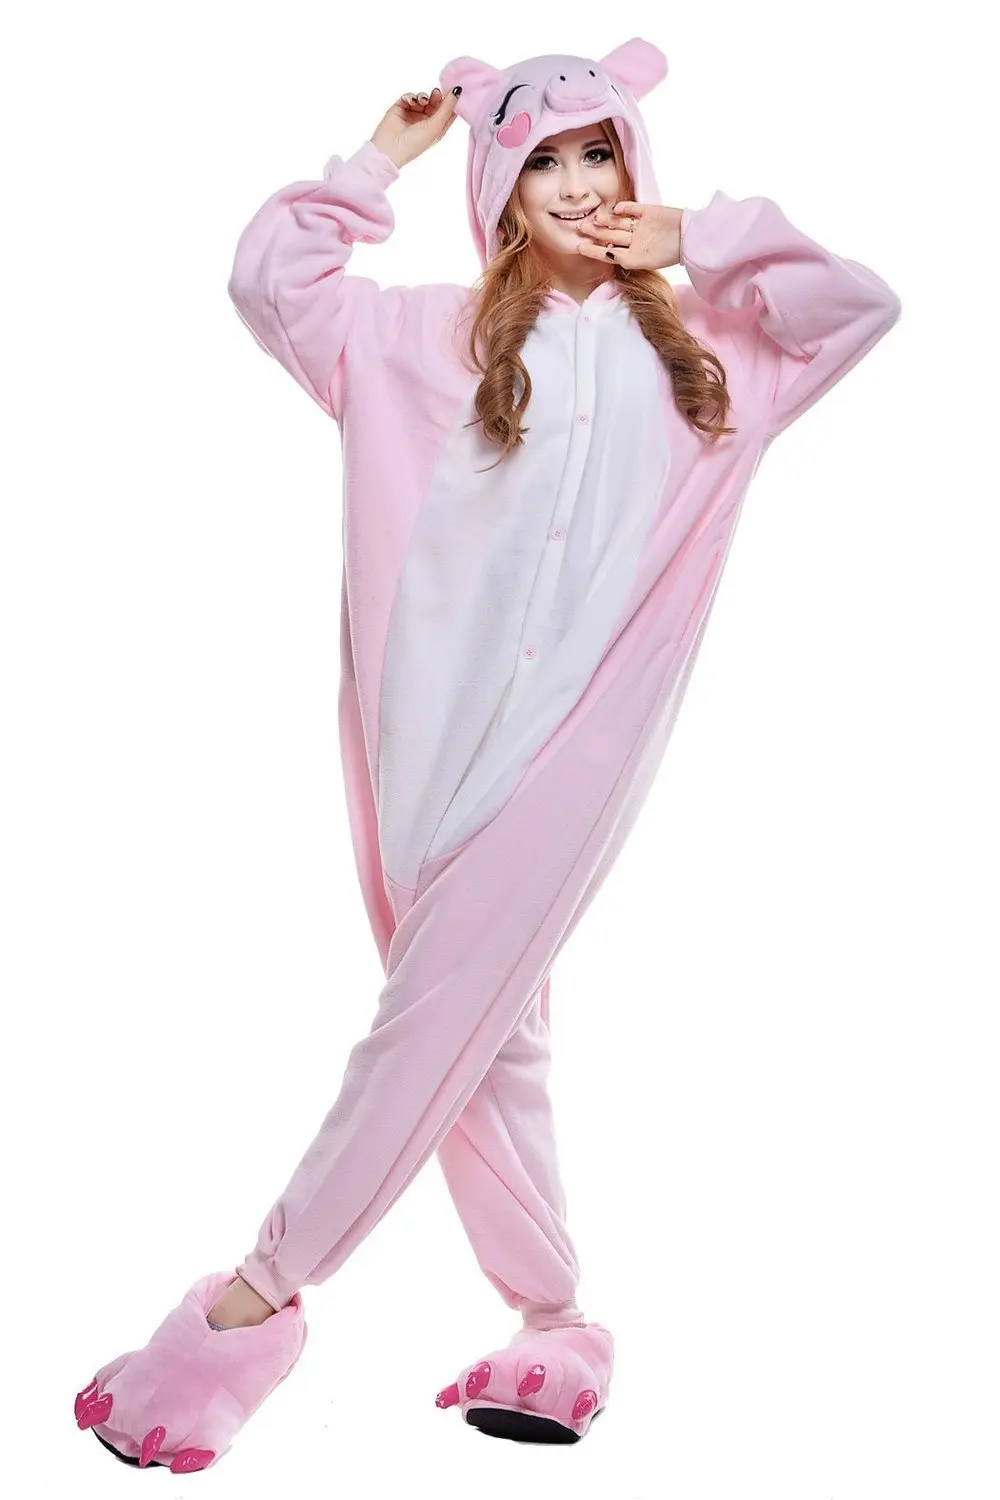 Wanziee Unisex Pink Pig Onesie Adult Pajama Plush One Piece Cosplay Animal Hoodie Costume S M L XL 